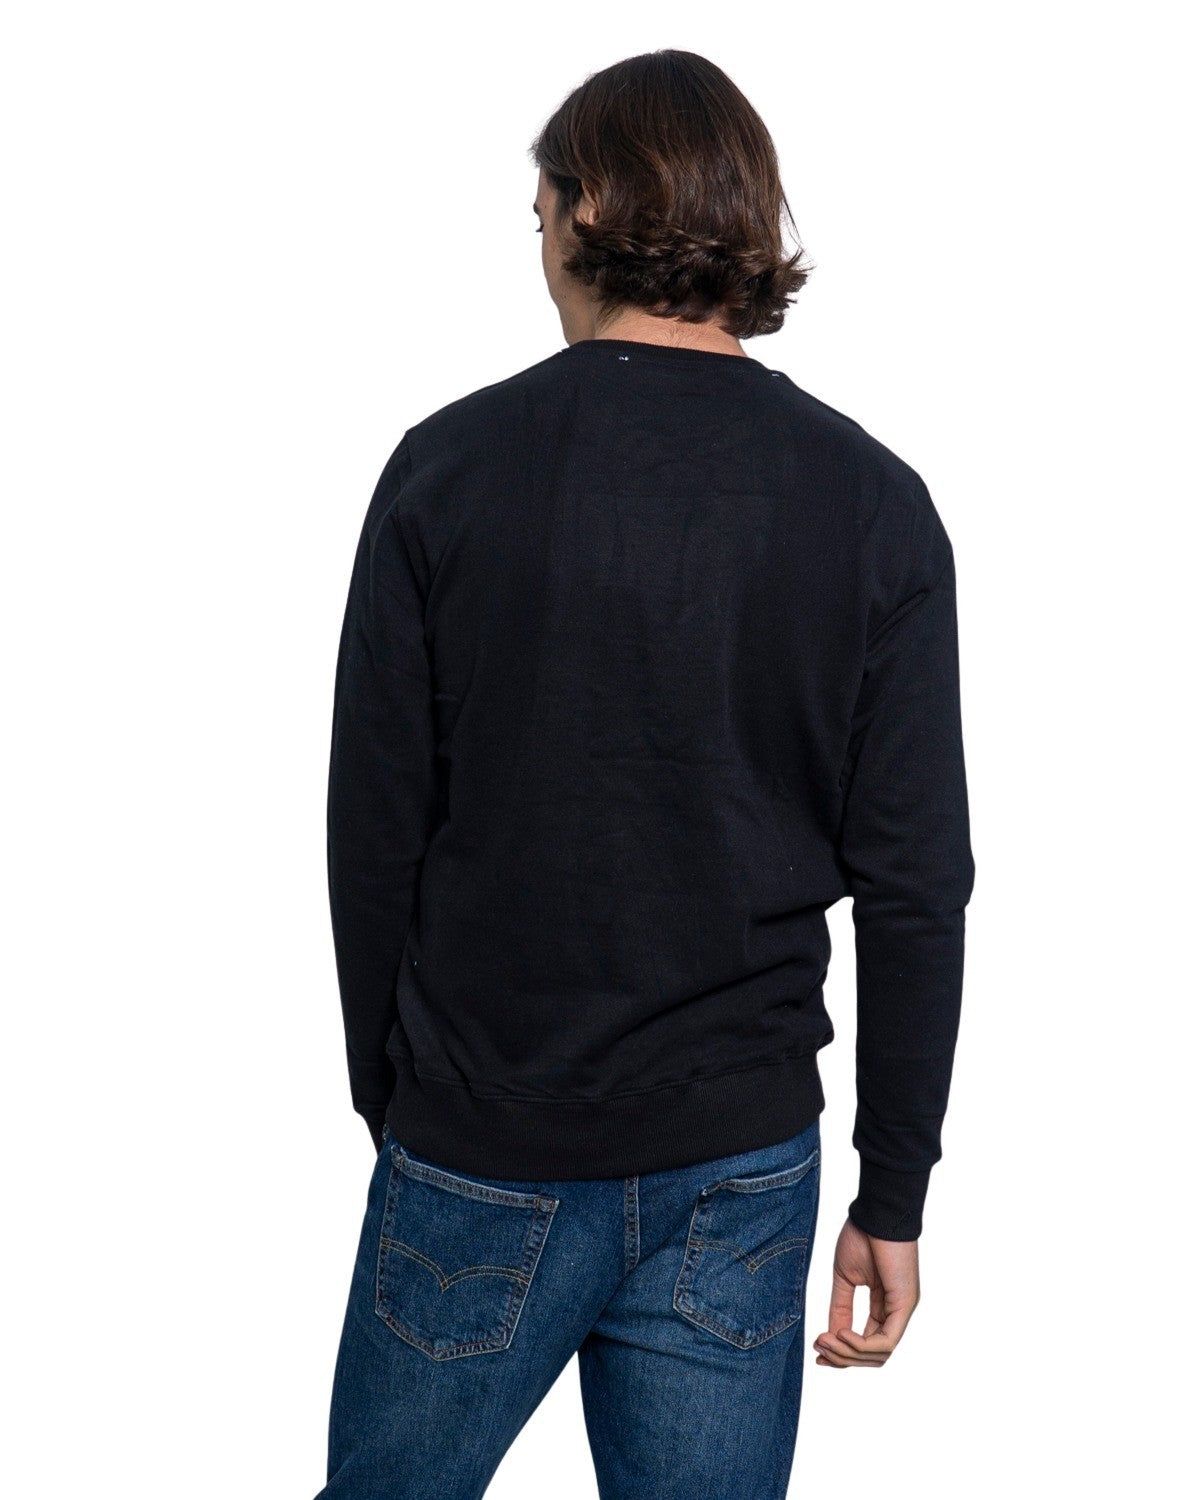 Brand: Calvin Klein Jeans Gender: Men Type: Sweatshirts Season: Spring/Summer  PRODUCT DETAIL • Color: black • Pattern: print • Fastening: slip on • Sleeves: long • Neckline: round neck  COMPOSITION AND MATERIAL • Composition: -100% cotton  •  Washing: machine wash at 30° -100% Cotton